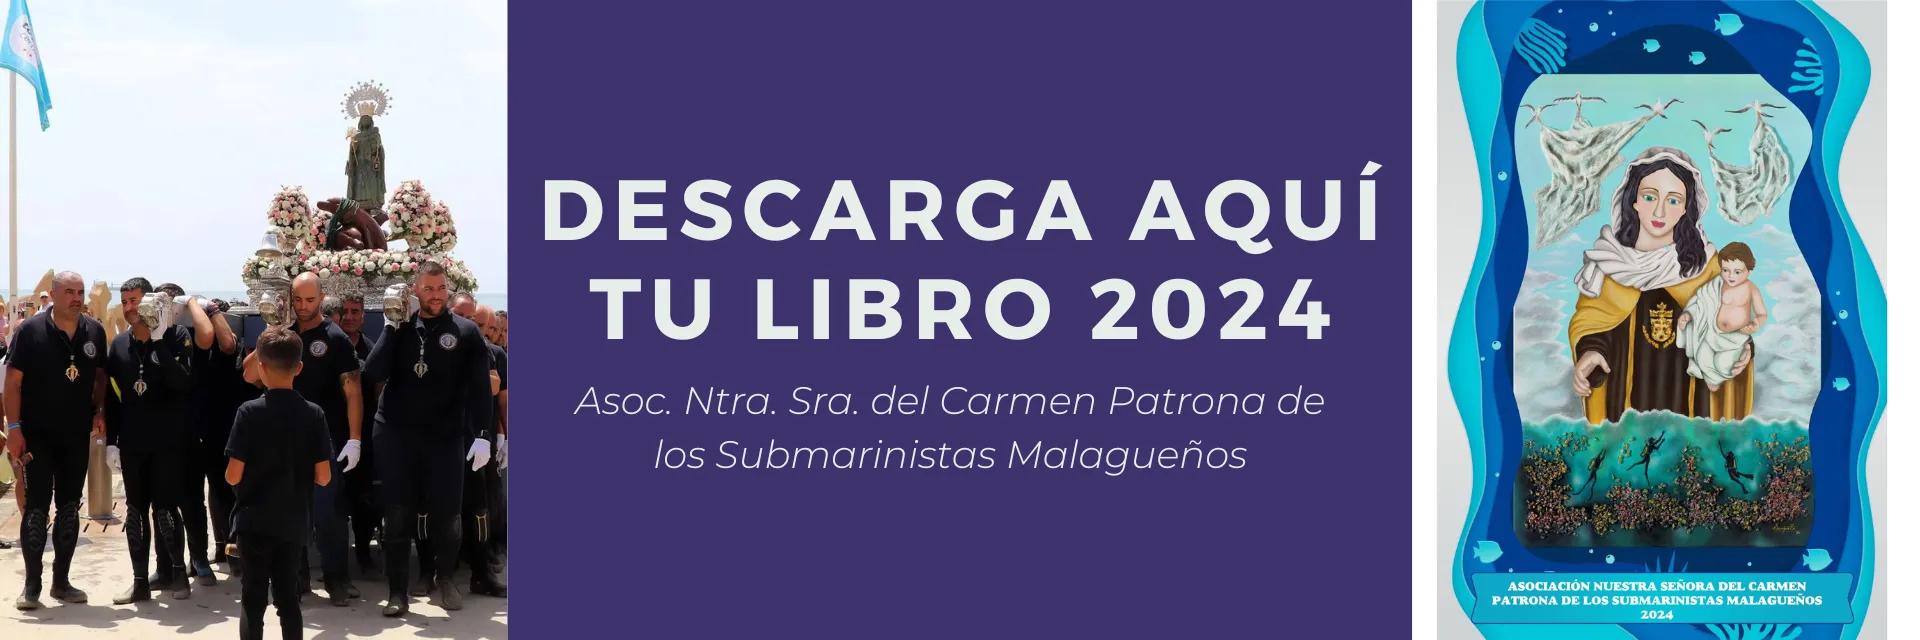 DESCARGA AQUÍ TU LIBRO 2024 (1).png